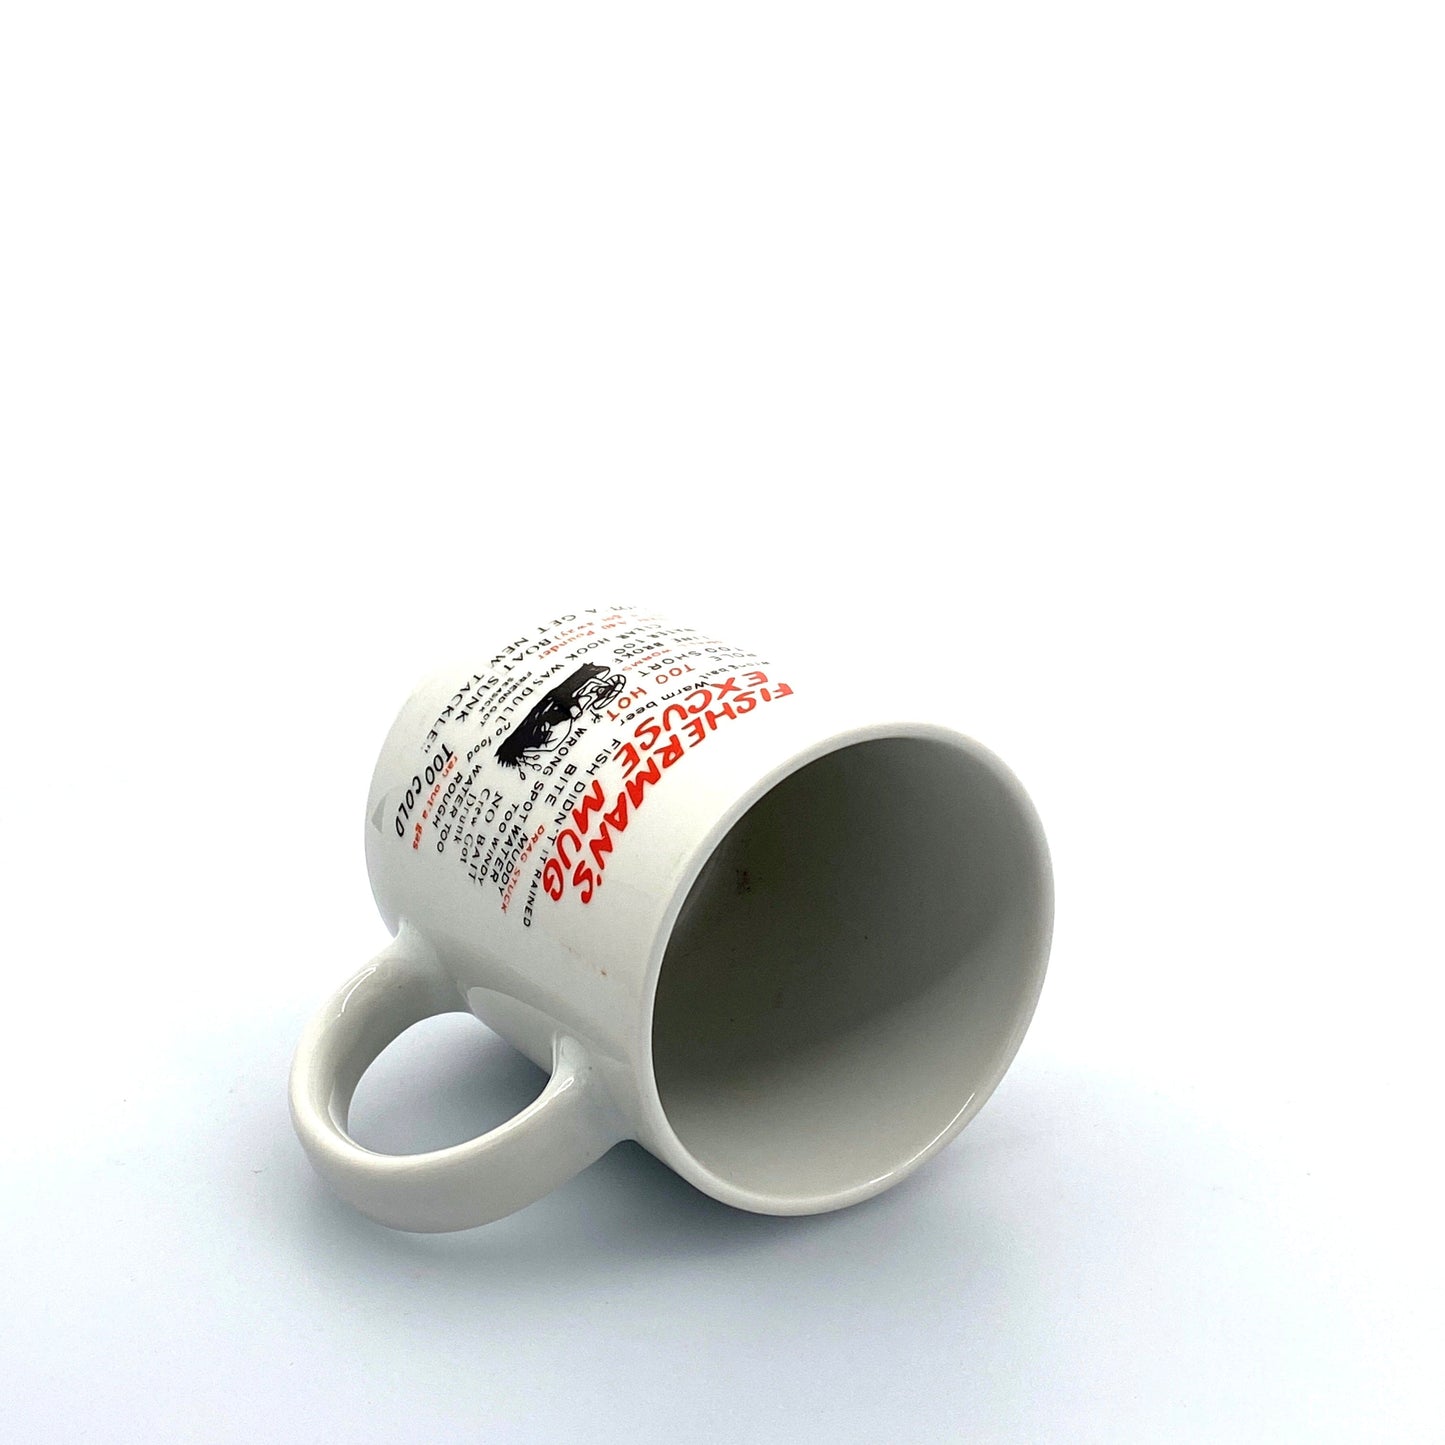 Novelty “Fisherman’s Excuse Mug” Humor White Ceramic Coffee Mug